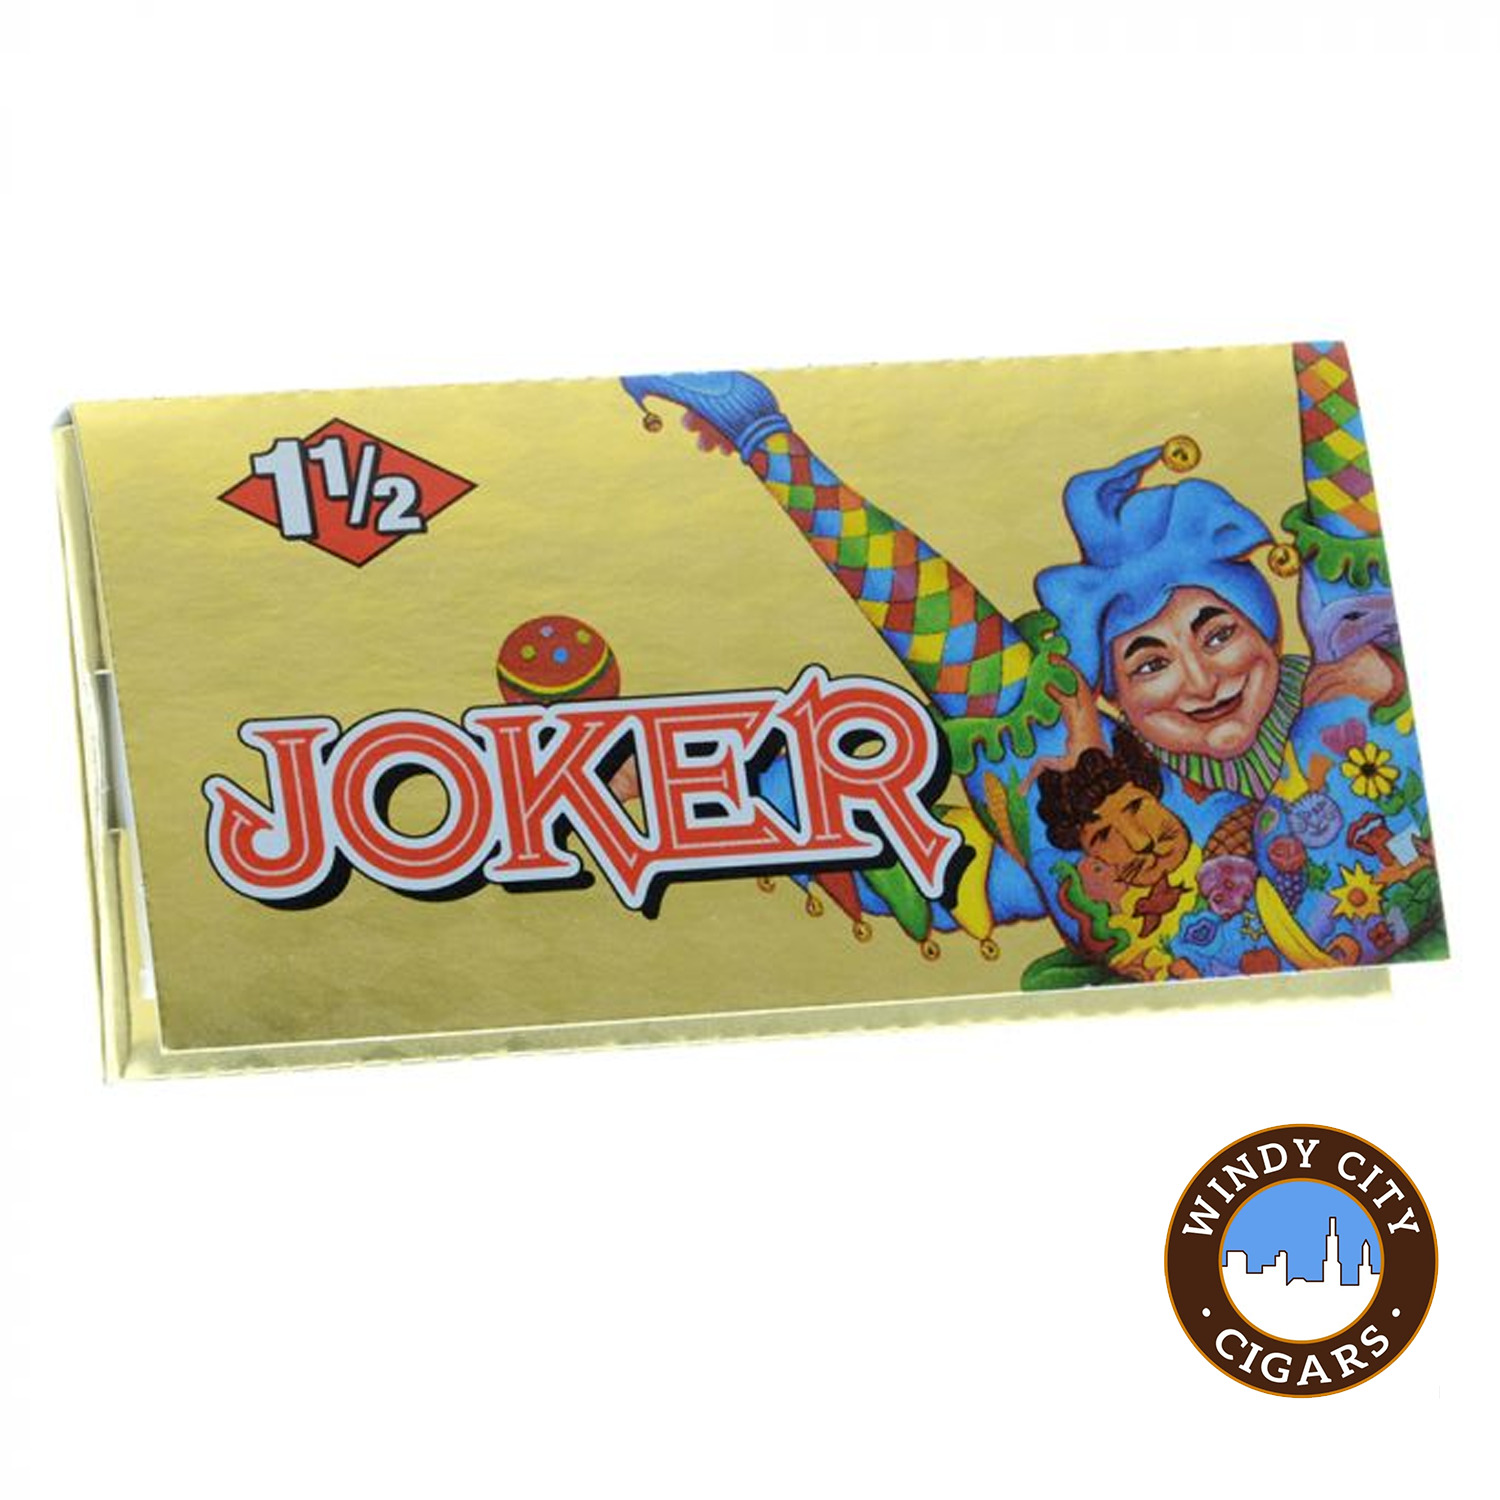 Joker Gold 1 1/2 Rolling Papers - 10 Packs